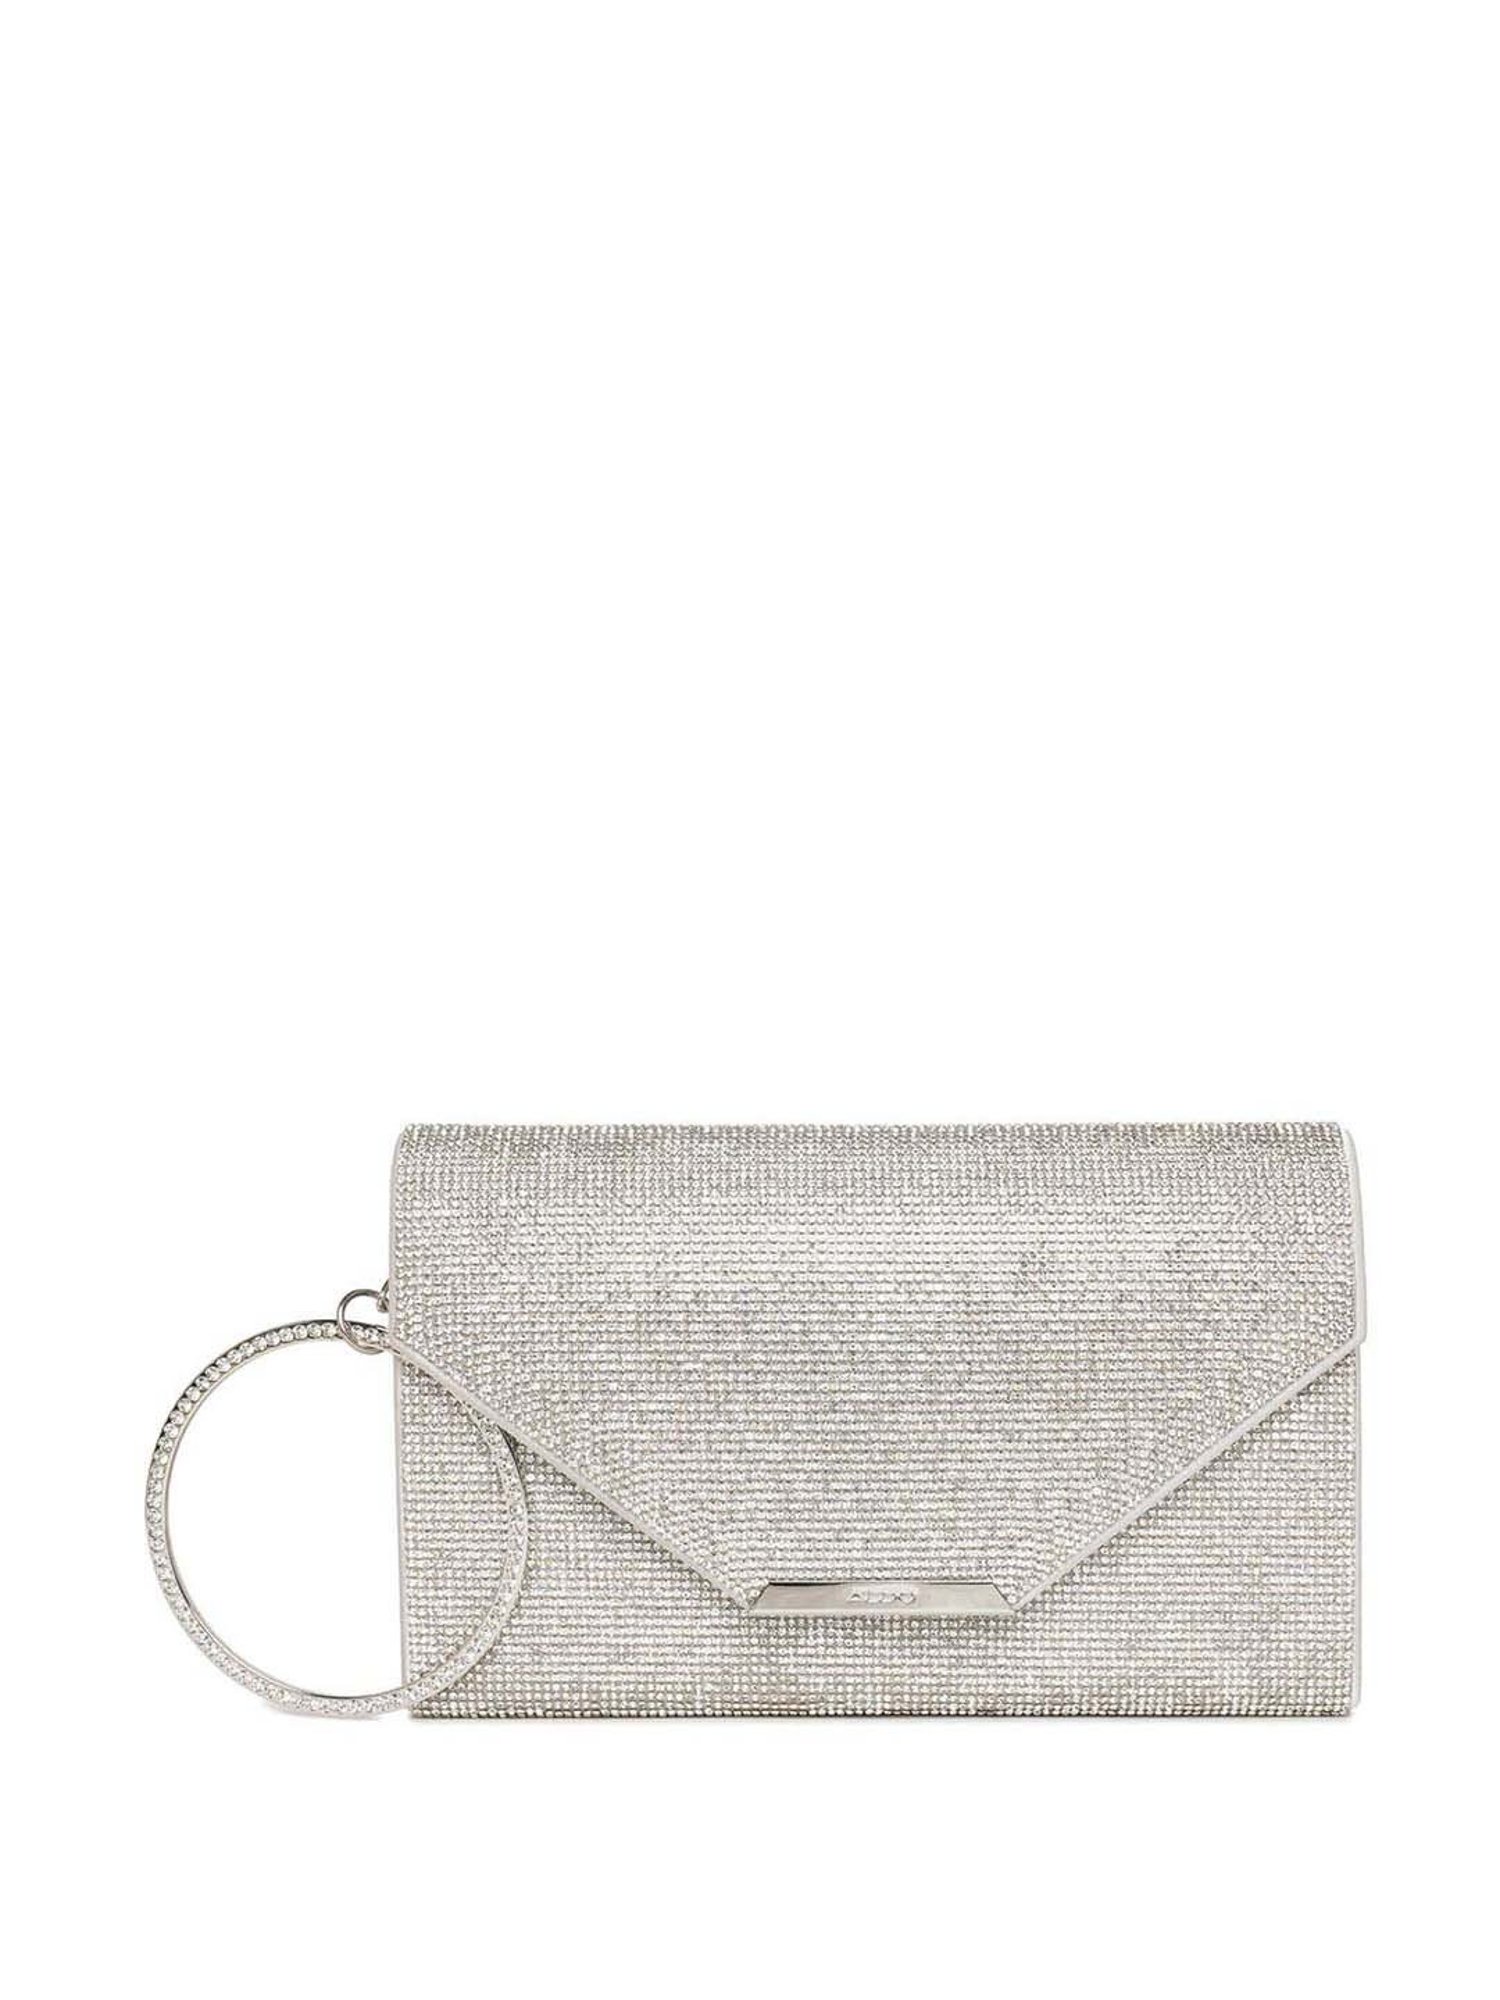 Rhinestone clutch bag - Silver-coloured - Ladies | H&M IN